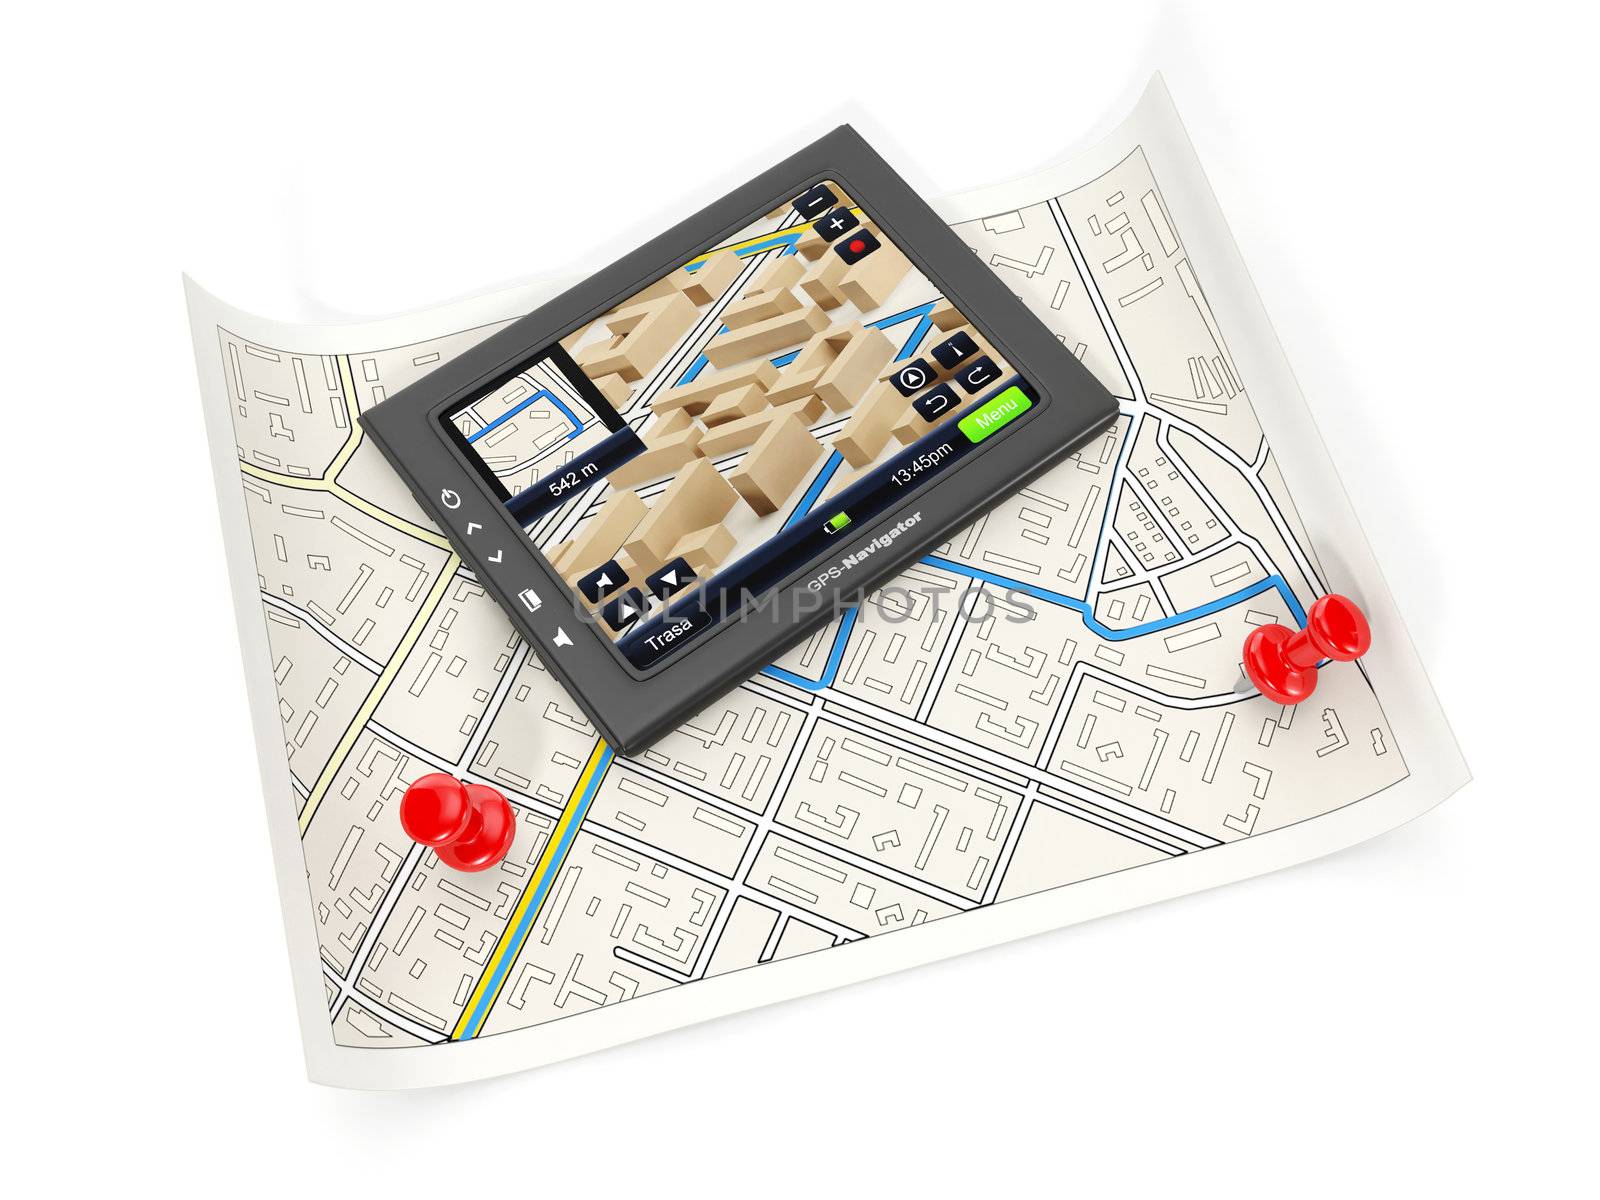 3d illustration: The GPS navigator and the card on a white backg by kolobsek